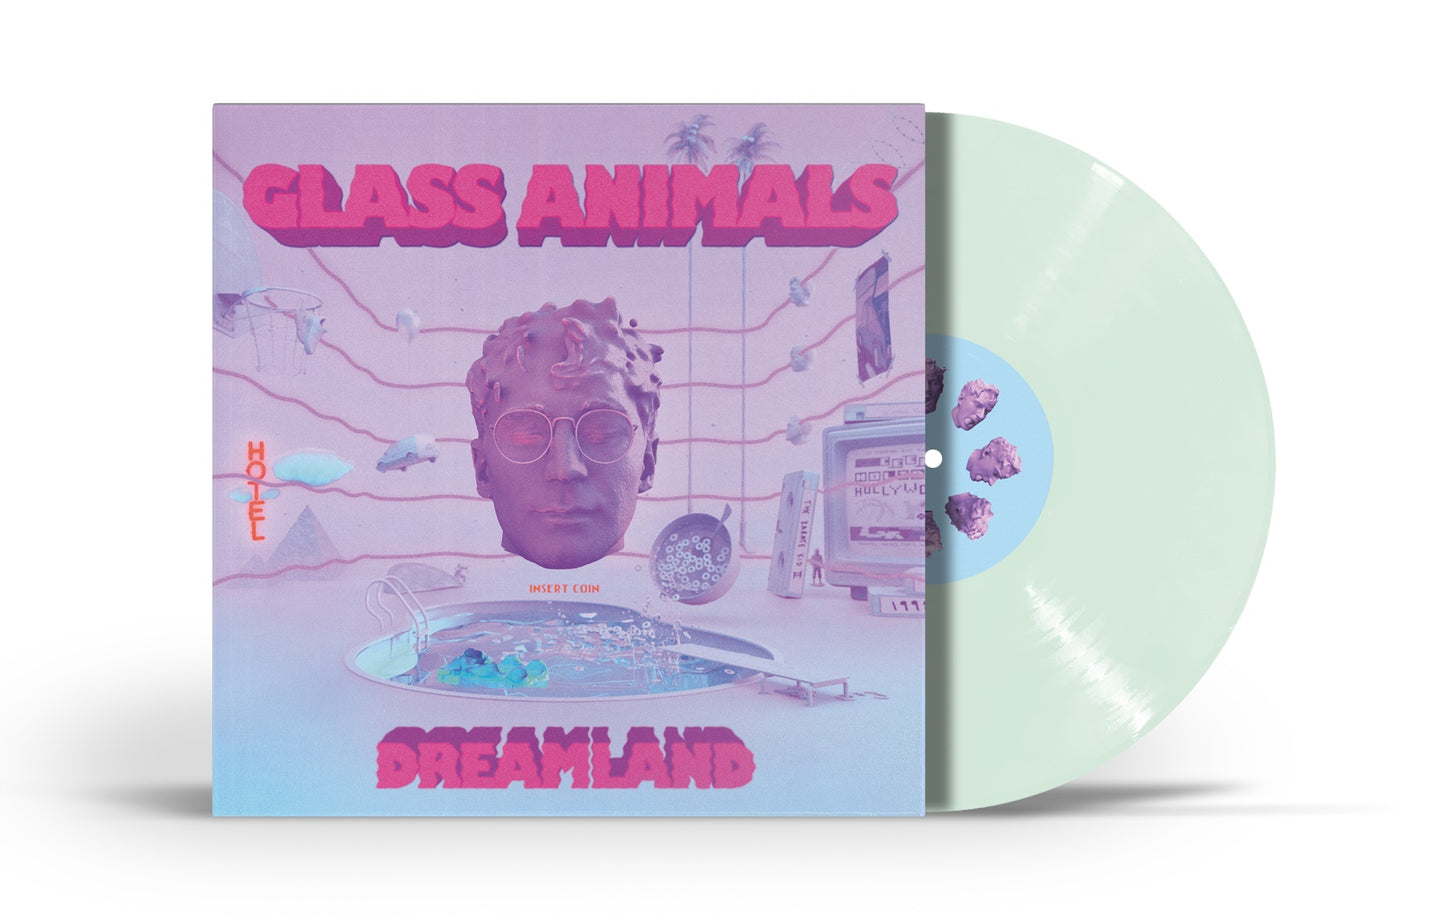 Dreamland - Glass Animals Vinyl